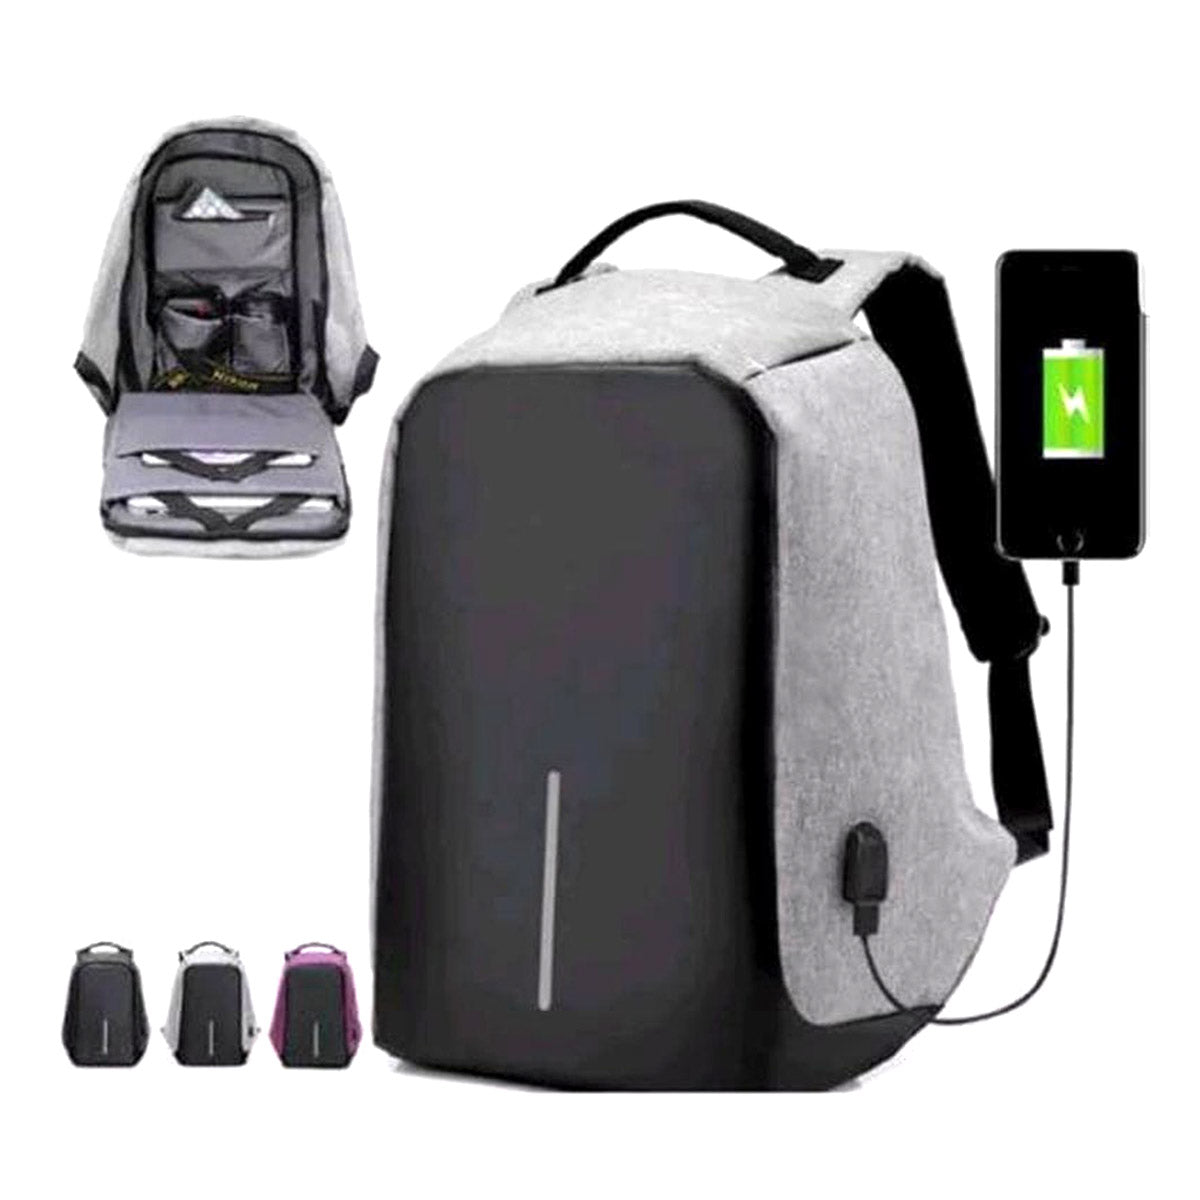 <tc>Ariko</tc> Anti Theft Backpack - Travel backpack - Black - Laptop bag - School bag - Incl USB cable